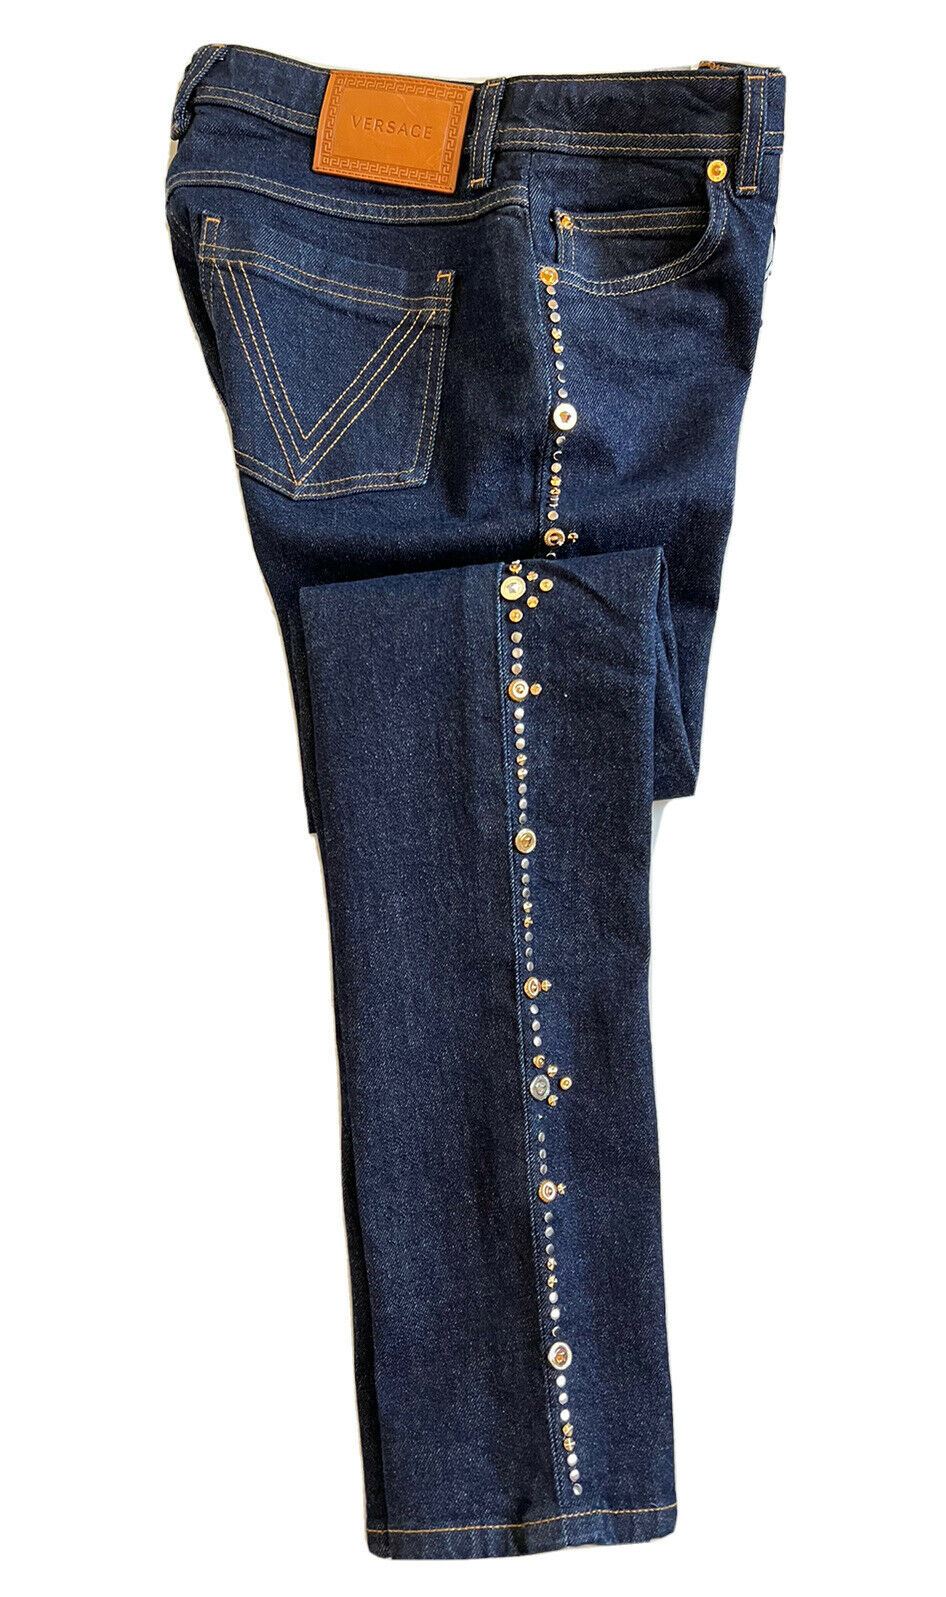 NWT $1175 Versace Studded Women's Denim Dark Blue Jeans Size 27 US Italy